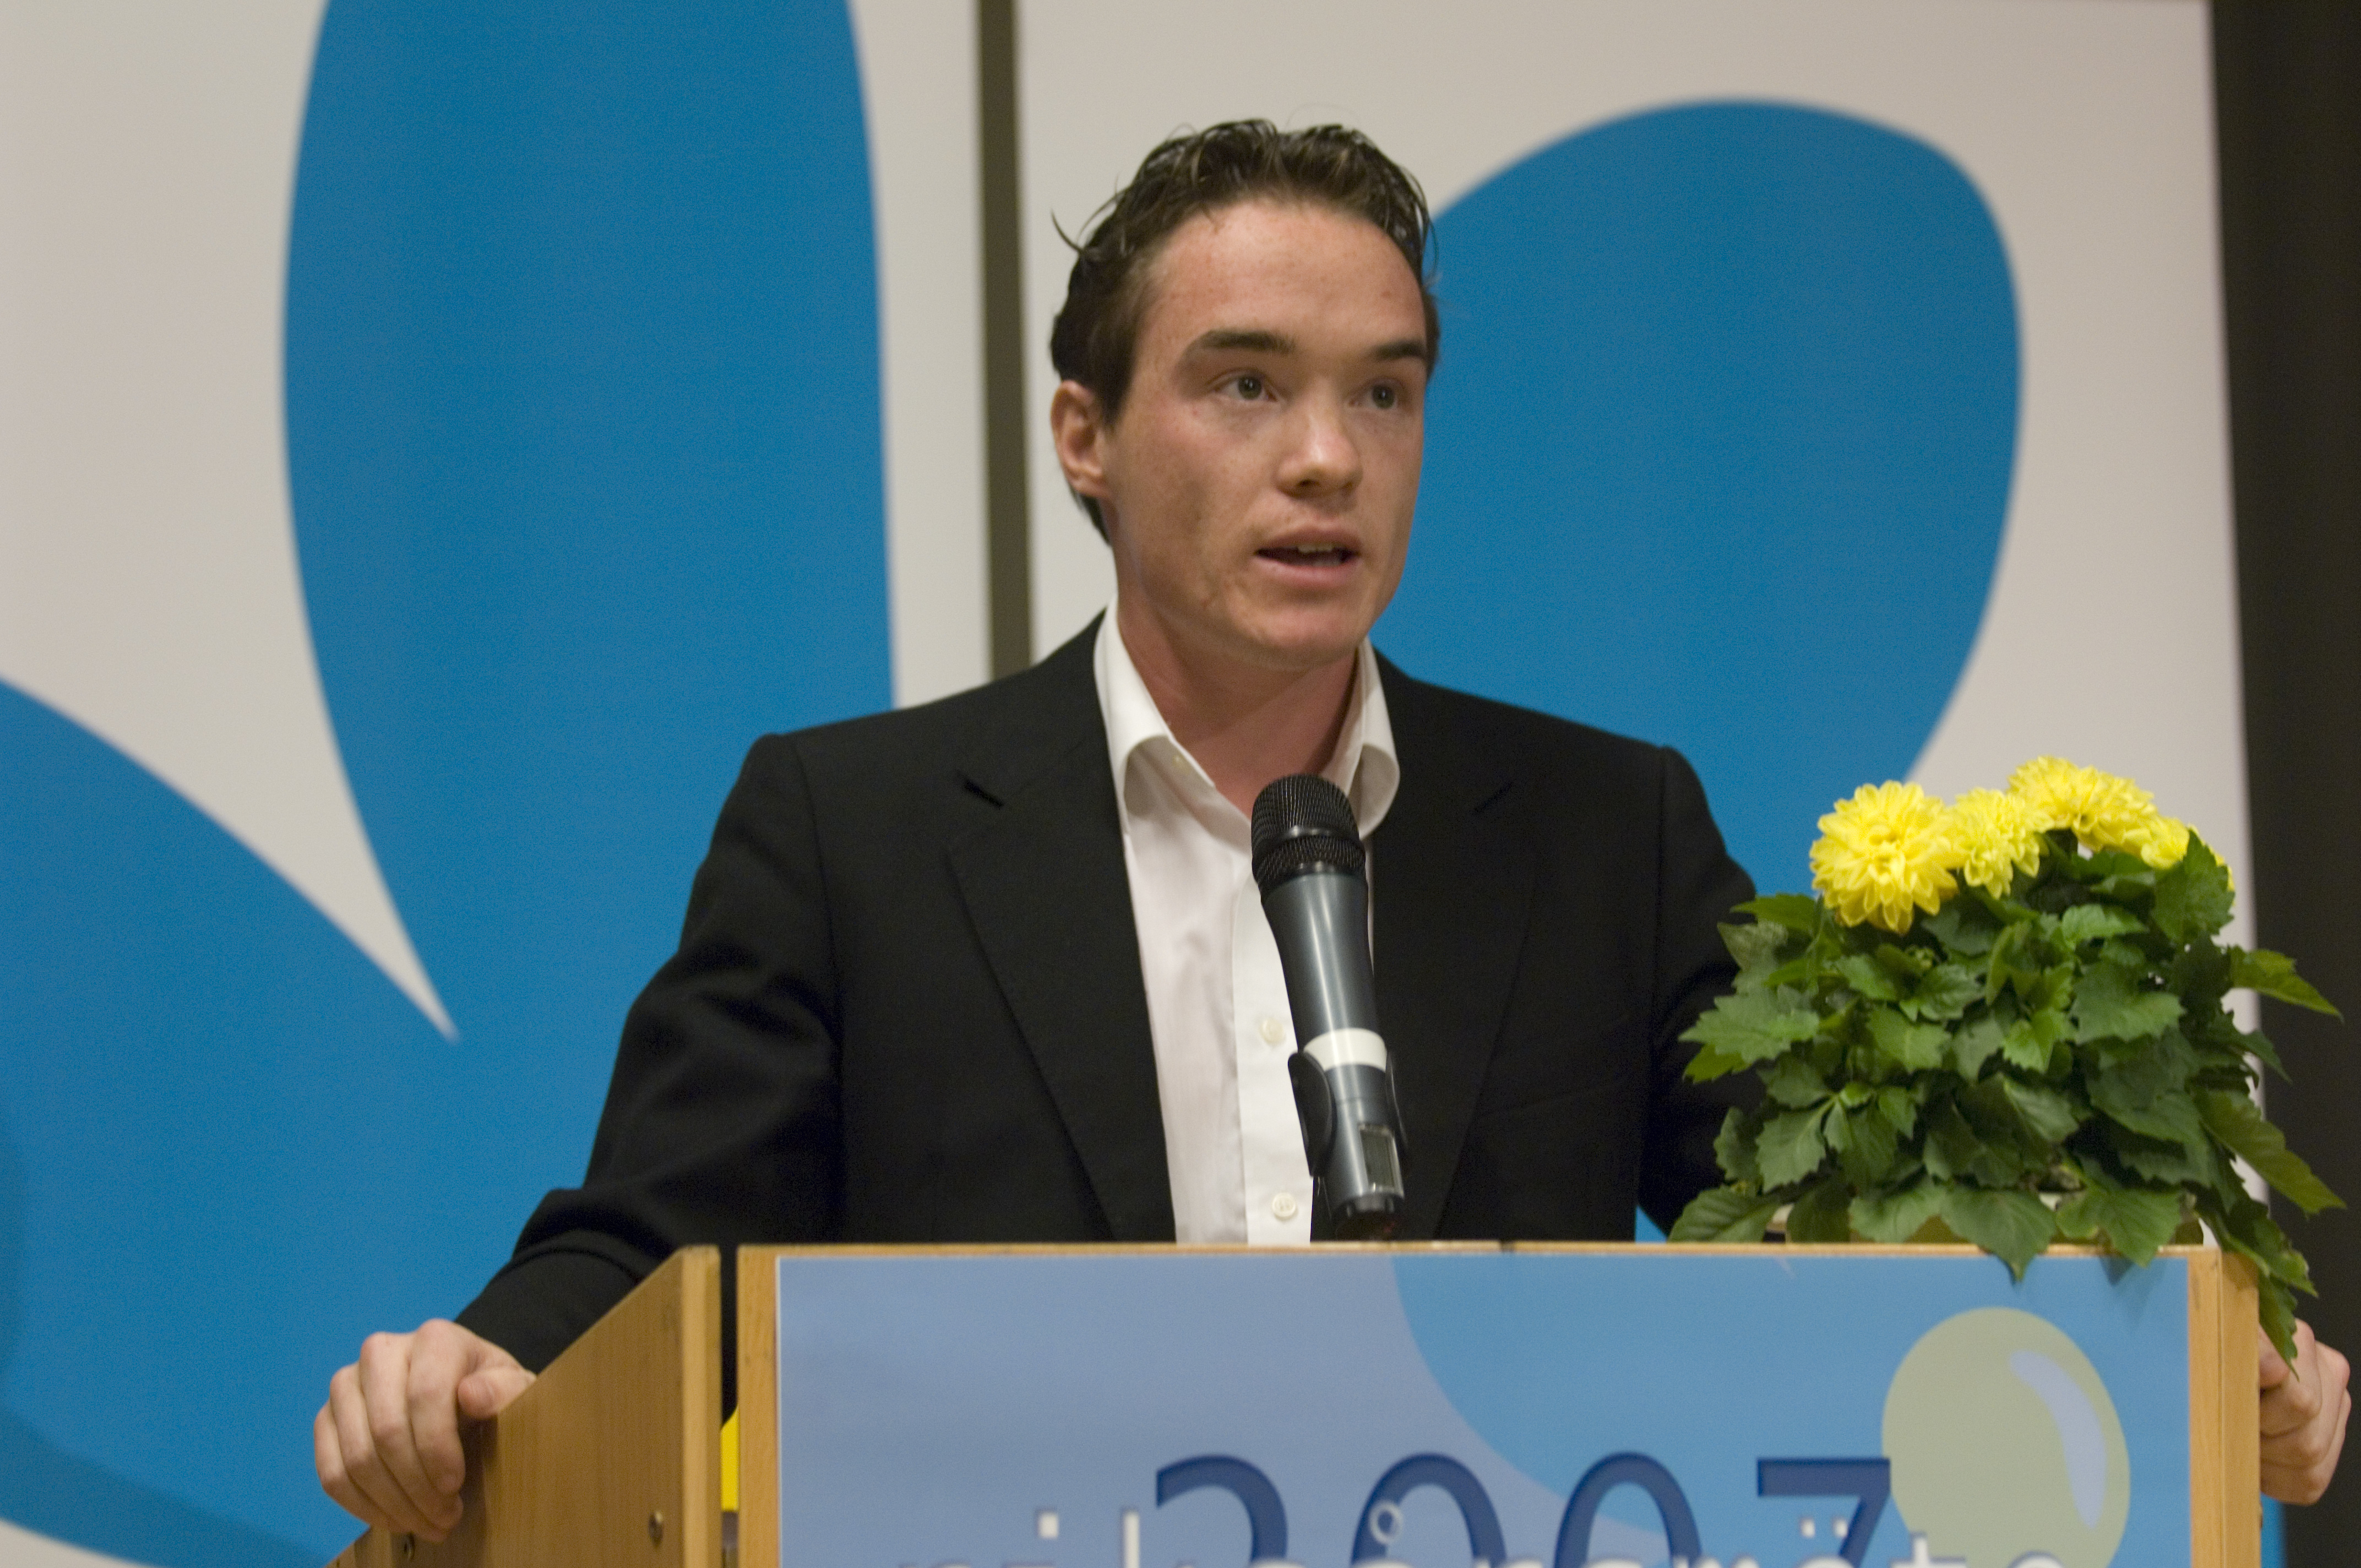 Riksdagsvalet 2010, Sverigedemokraterna, SMS-duellen, Kent Ekeroth, Politik